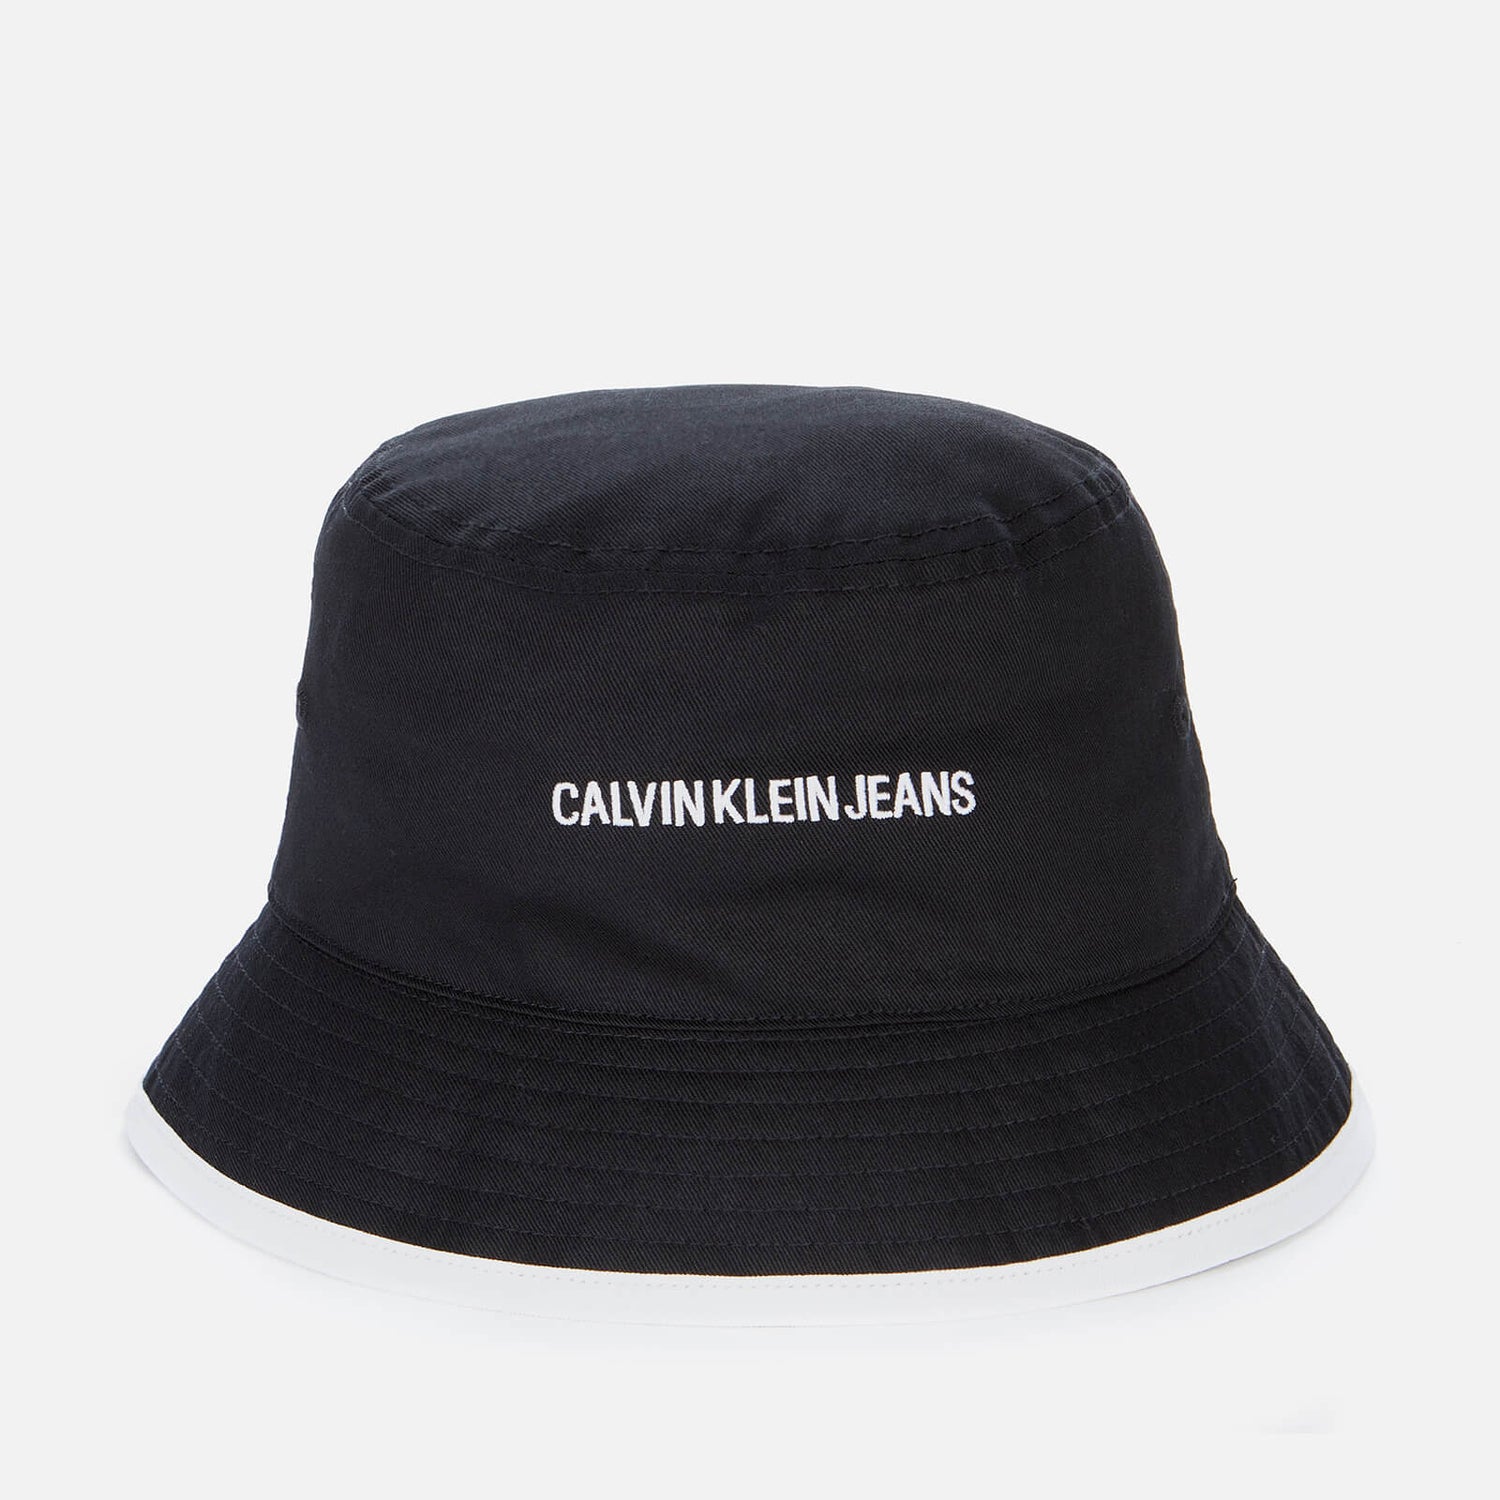 Calvin Klein Jeans Women's Bucket Hat - Black